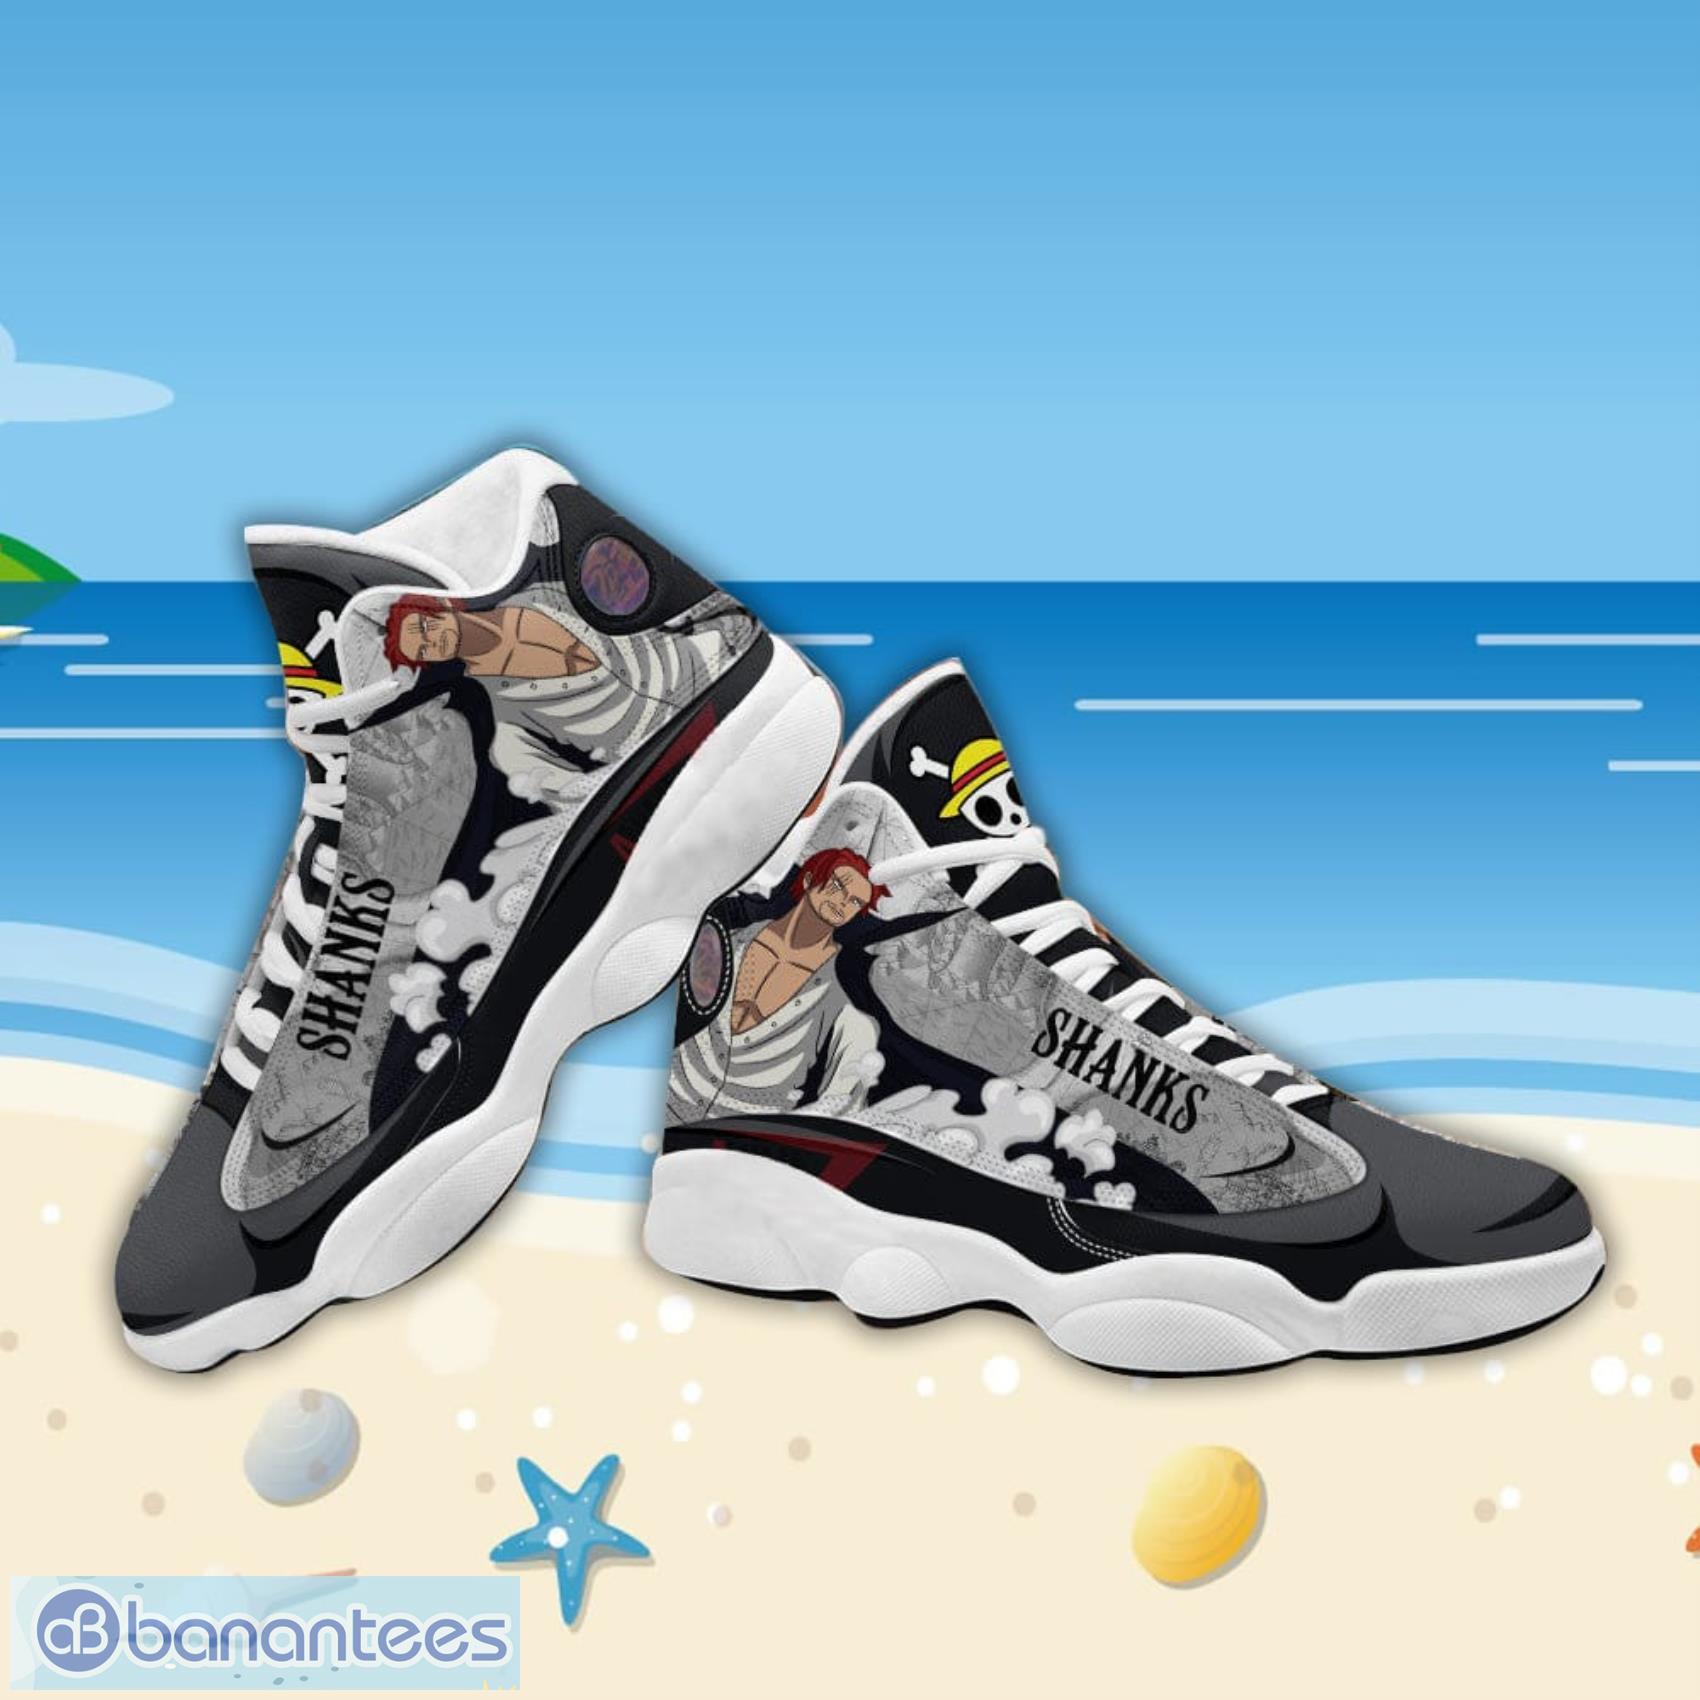 One Piece Shanks AJ13 Sneakers Anime Air Jordan 13 Shoes - Banantees